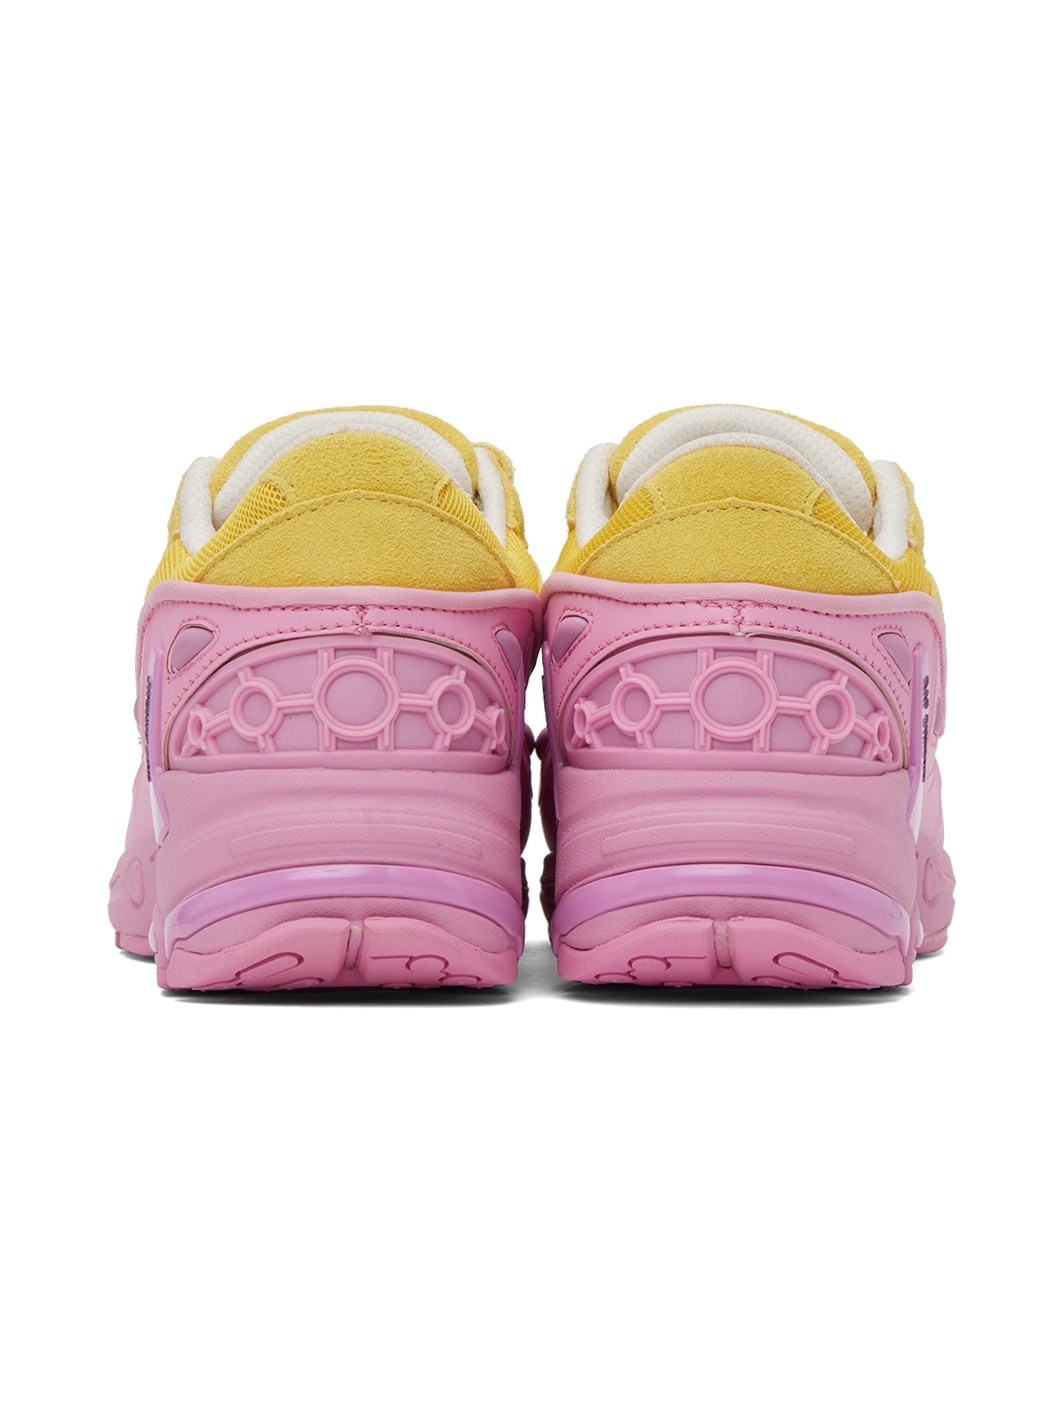 Yellow & Pink Pharaxus Sneakers - 2